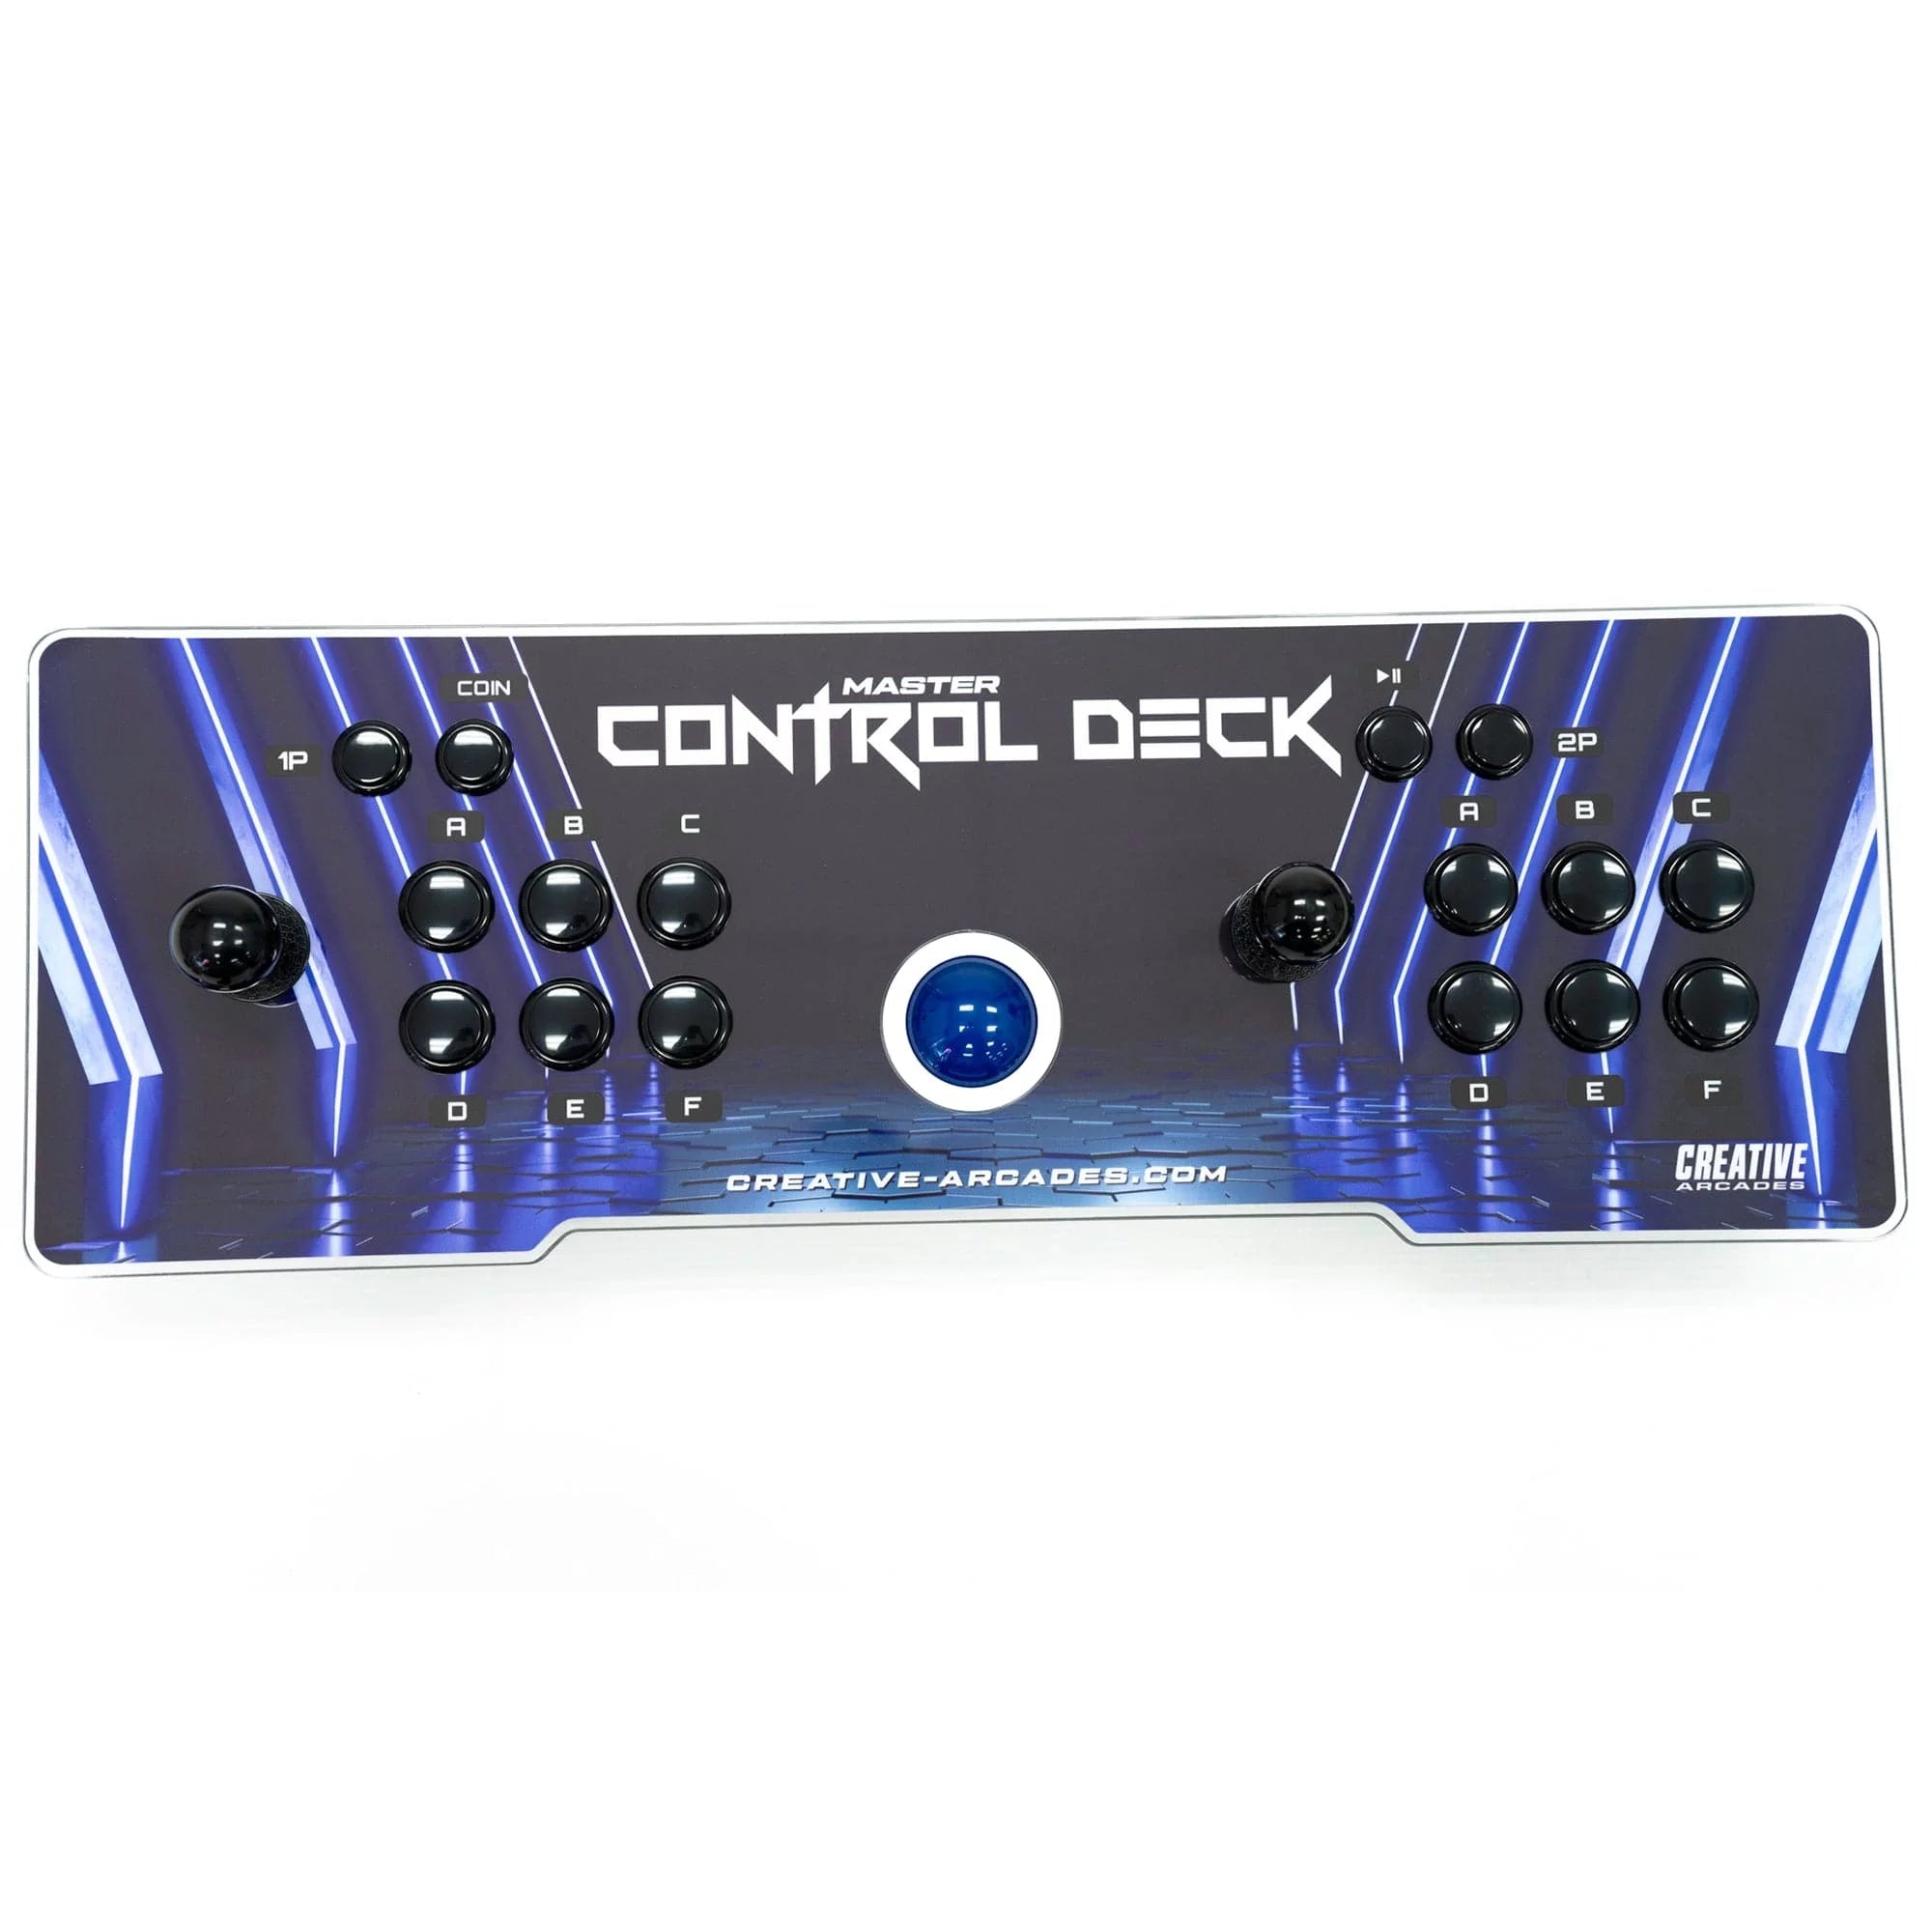 Control Deck With trackball - creative arcades